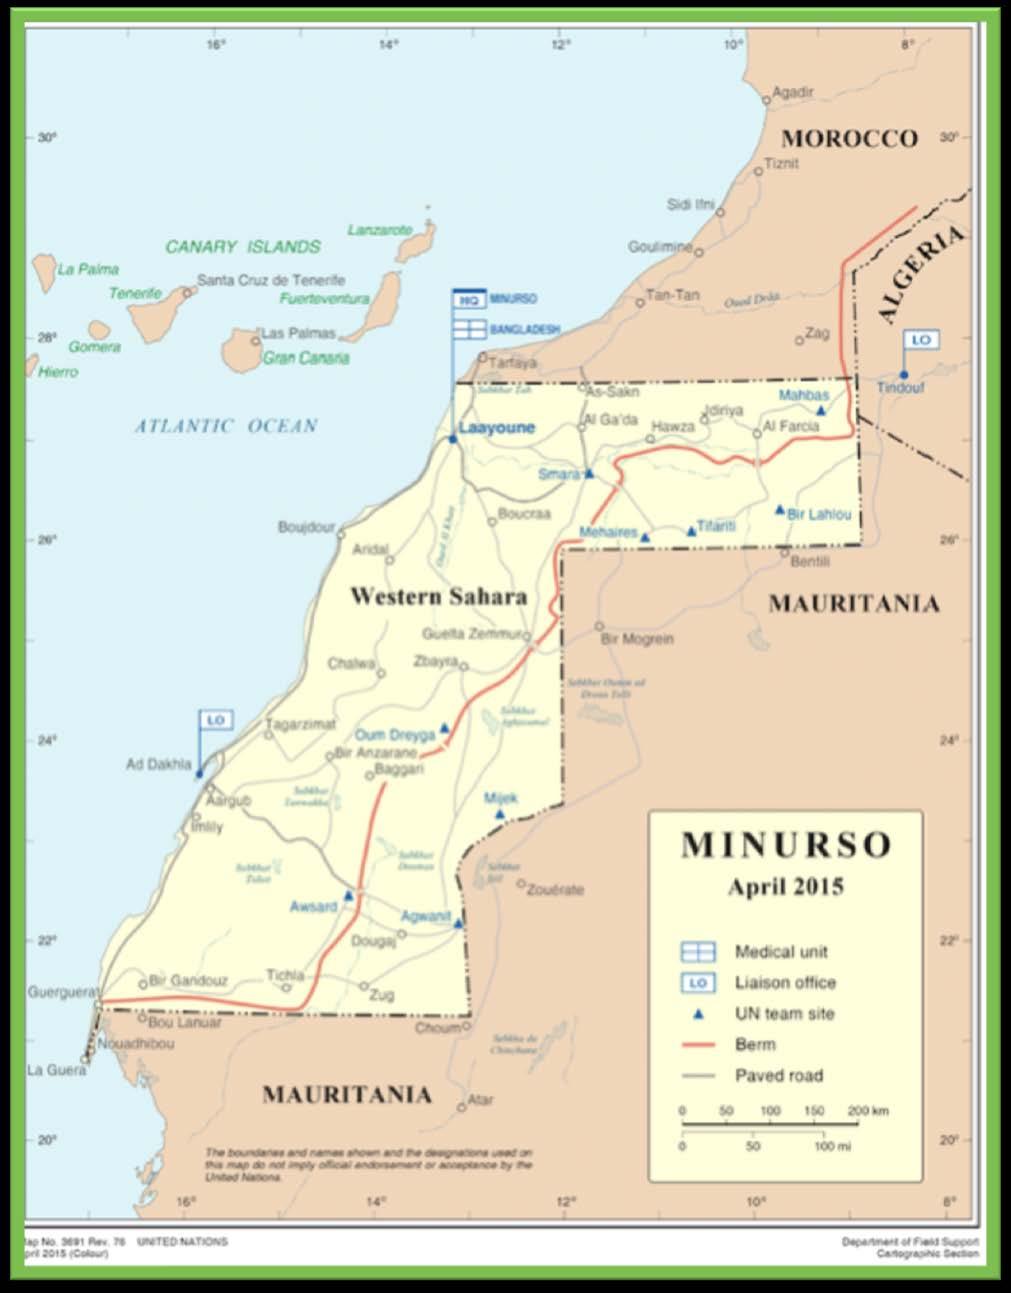 Figure 1. A map of MINURSO.